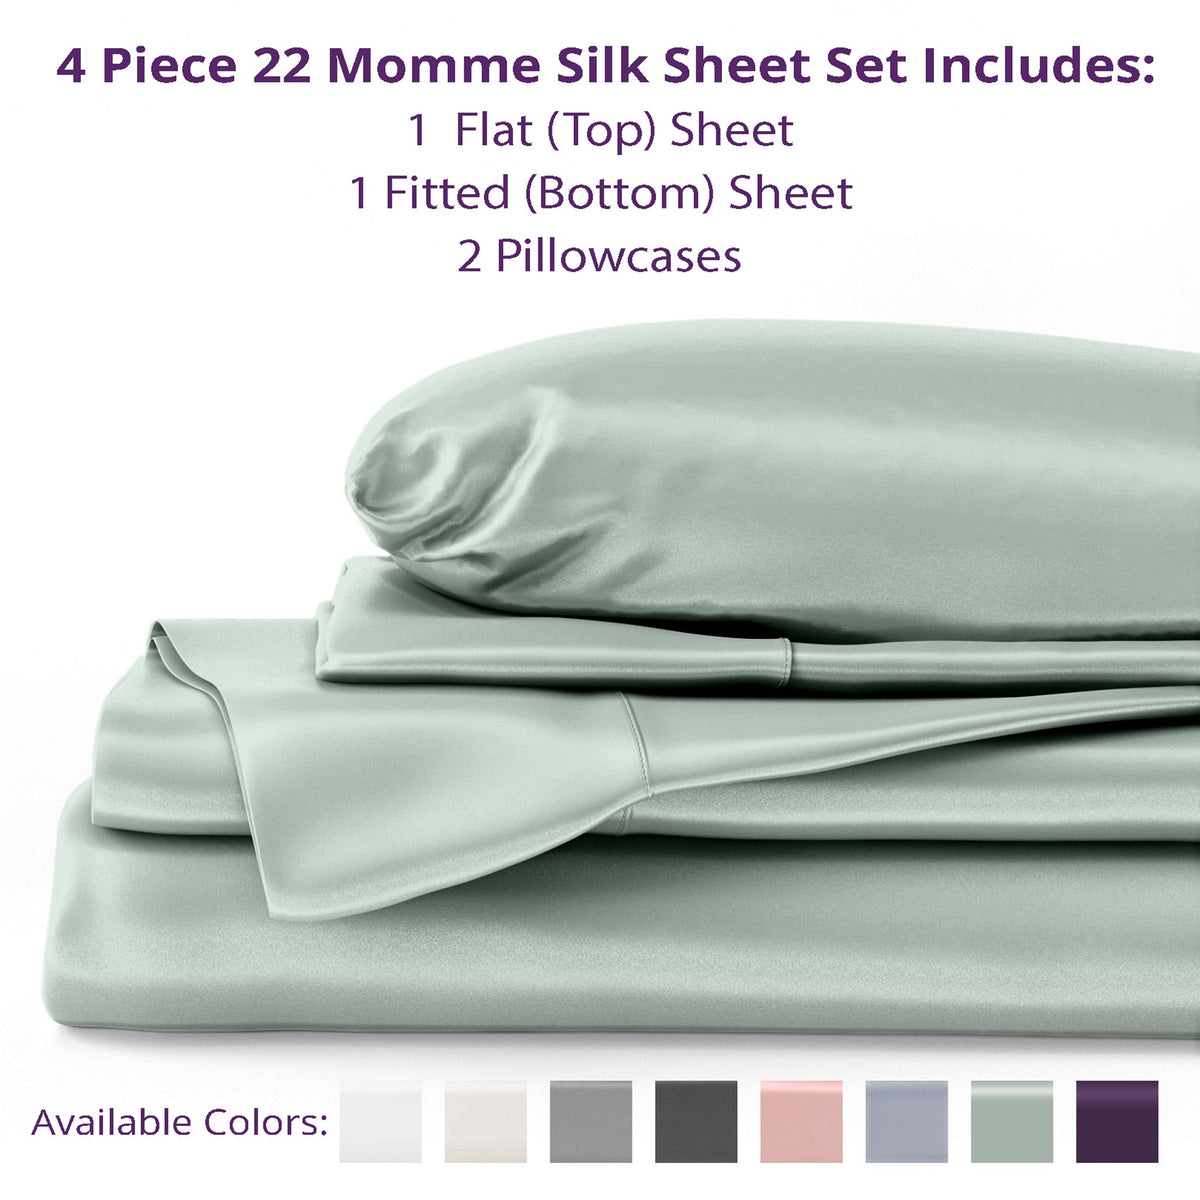 22 Momme Silk Sheet Sets - King